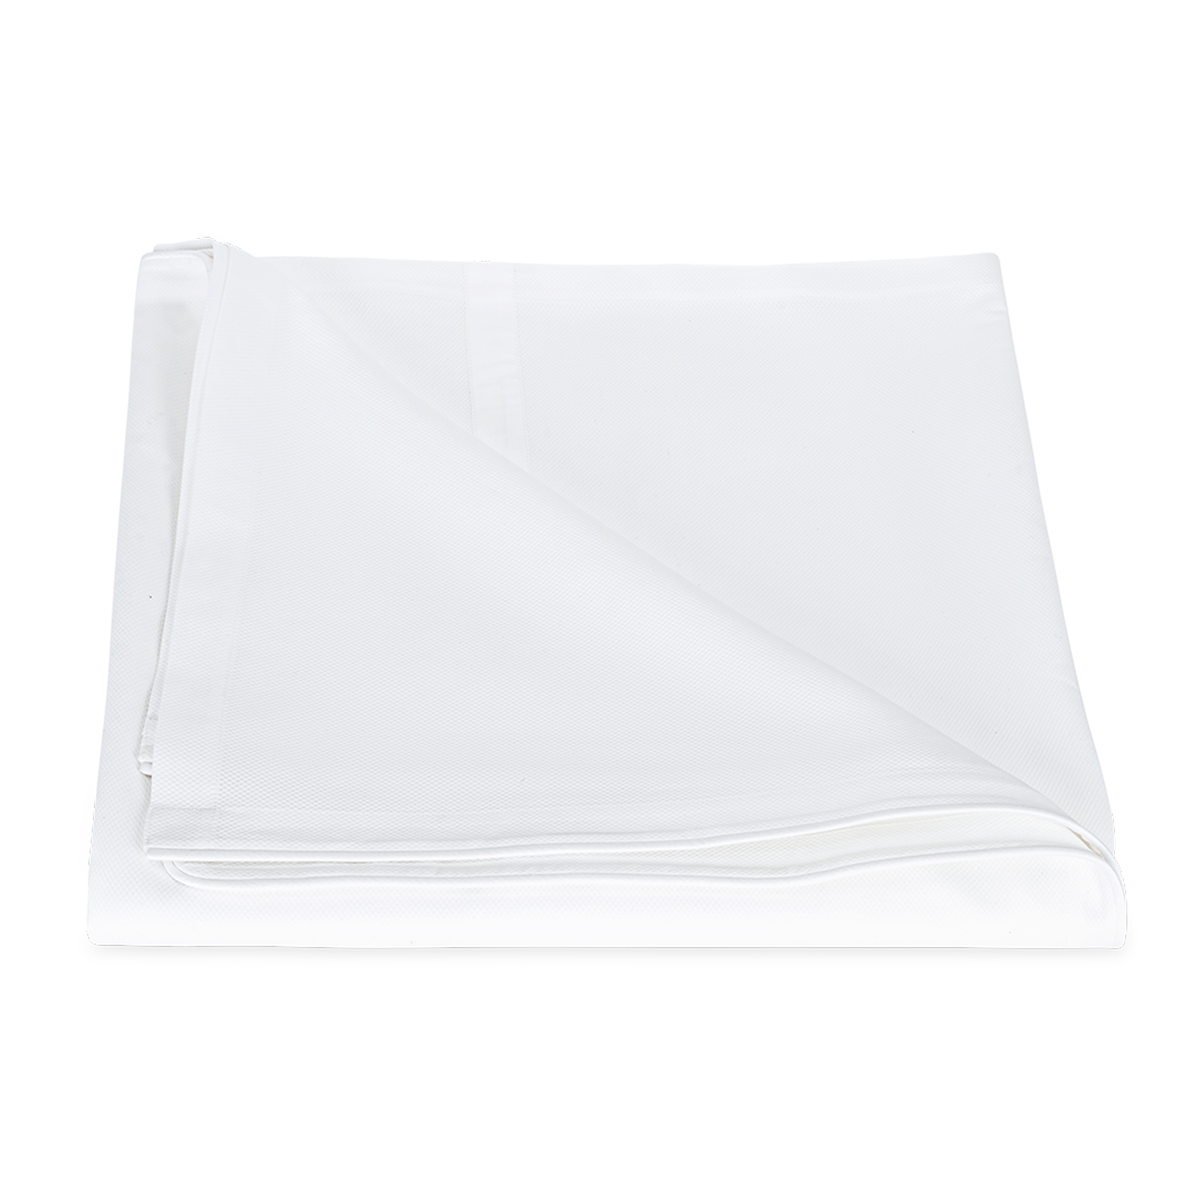 Folded Duvet Cover of Matouk Louise Pique Bedding in Color White